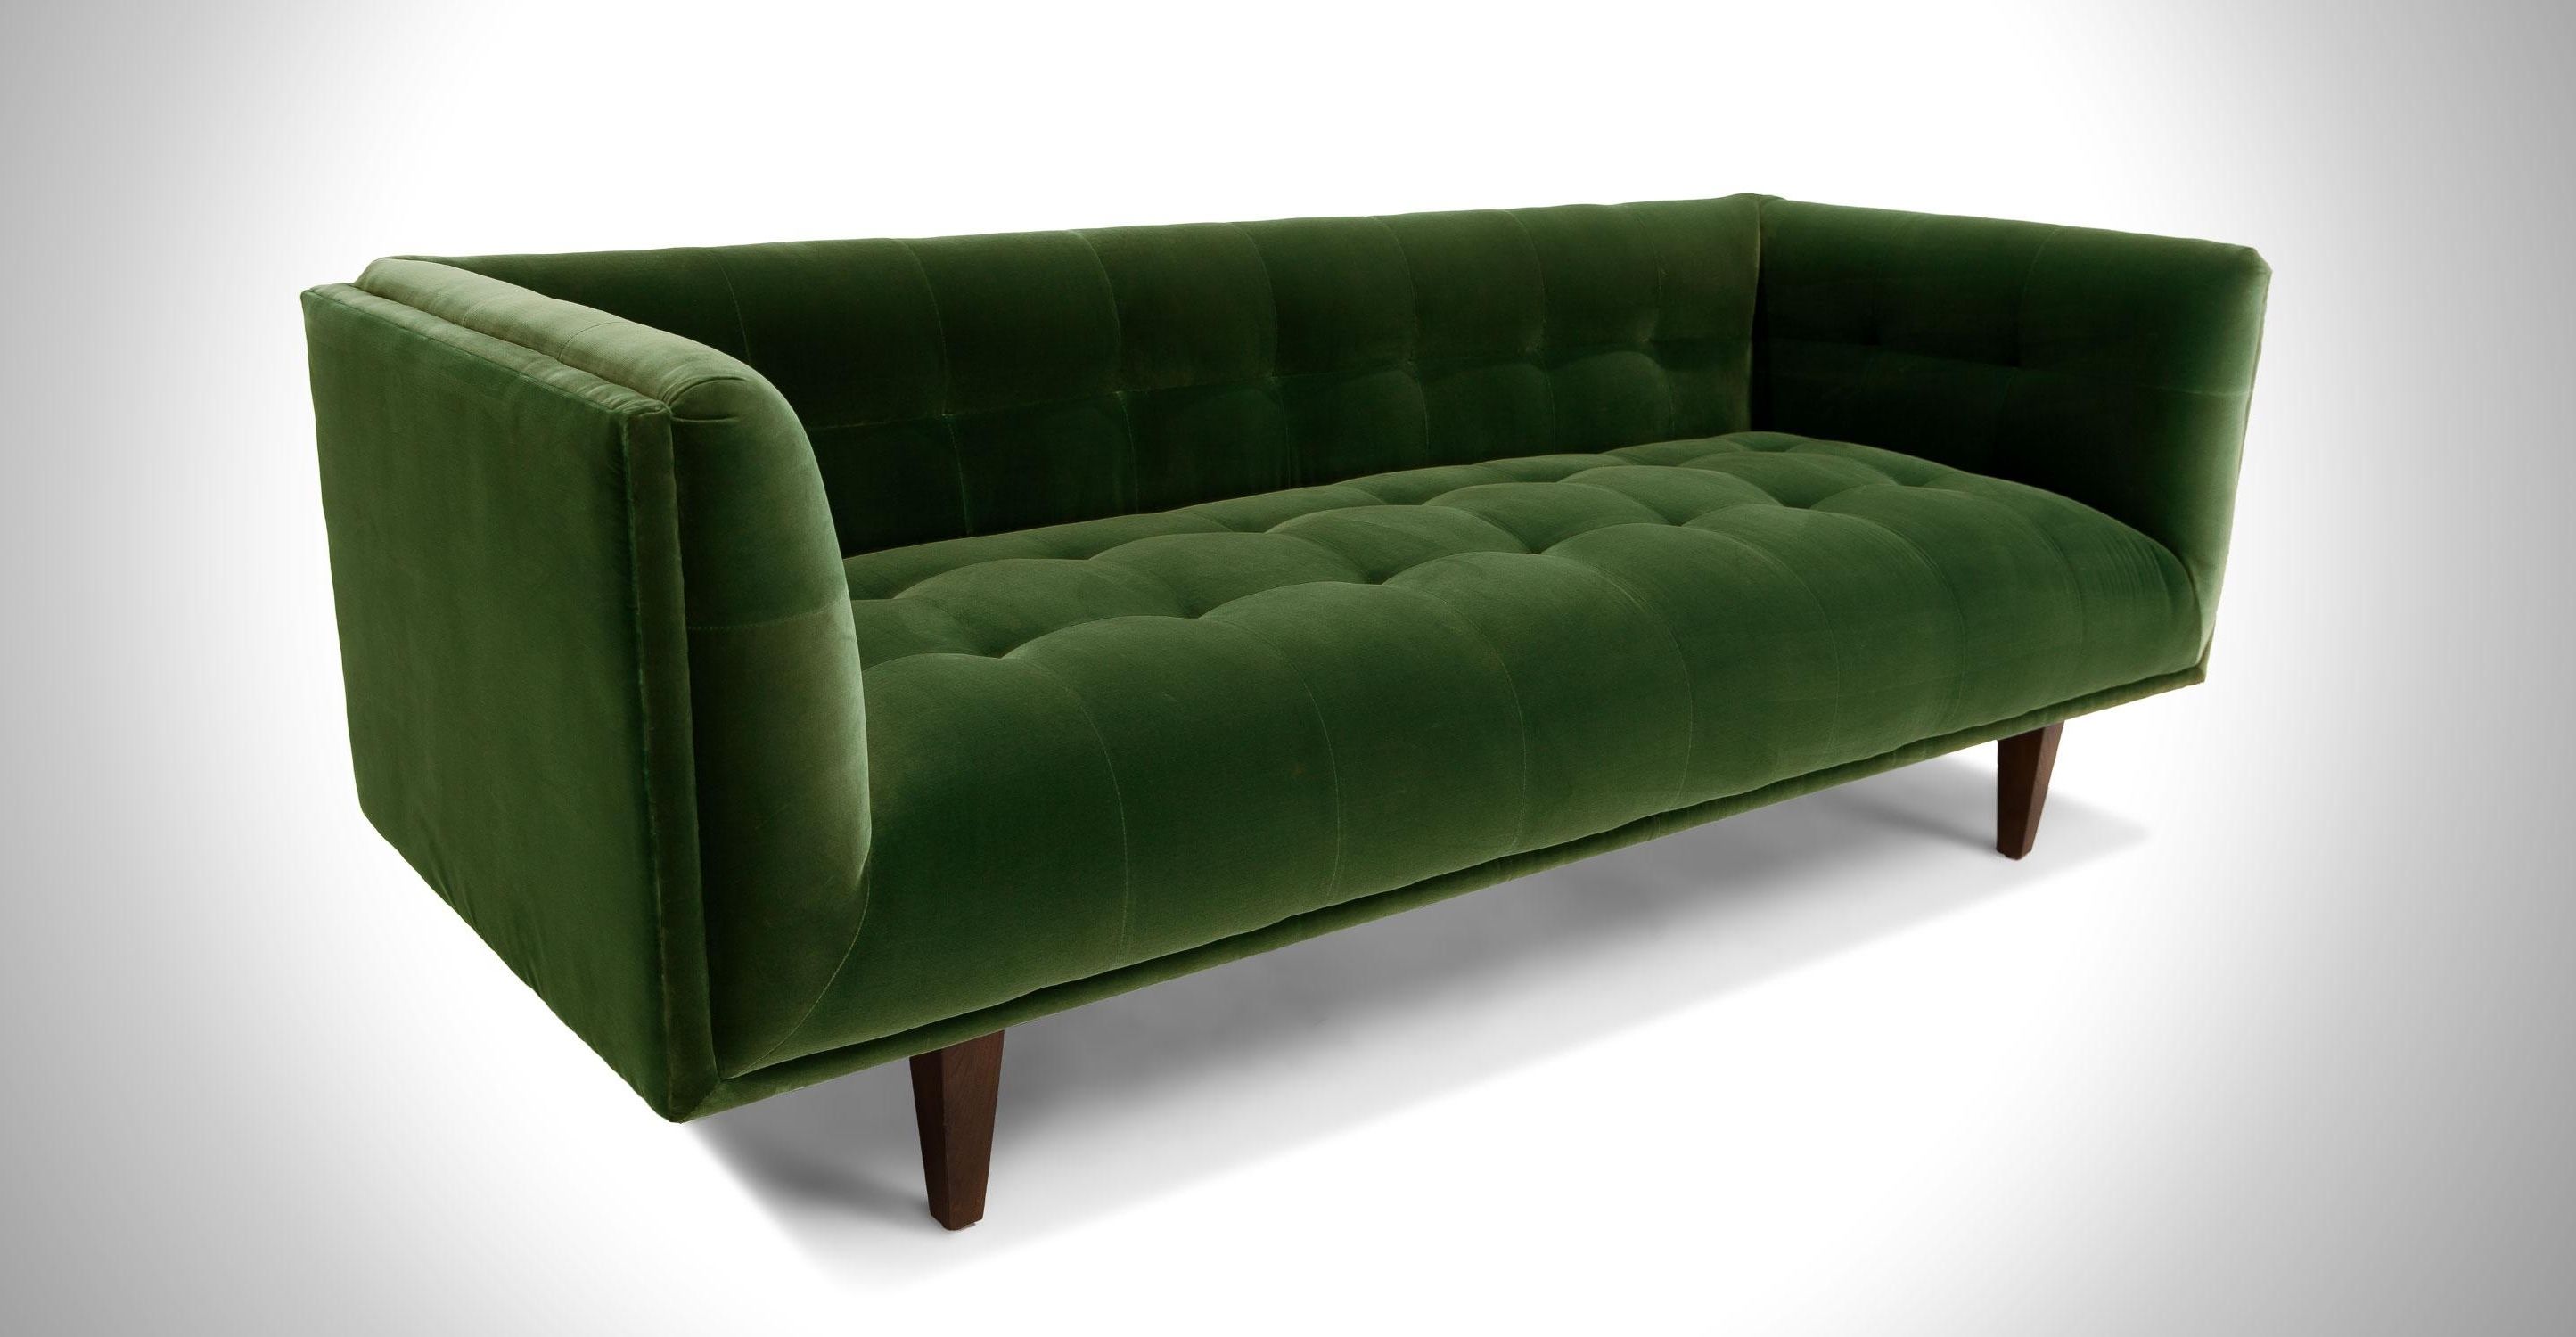 Most Recent Aqua Sofas With Furniture : Small Loveseat Sofa New Echo Ice Aqua Sofa Sofas (View 17 of 20)